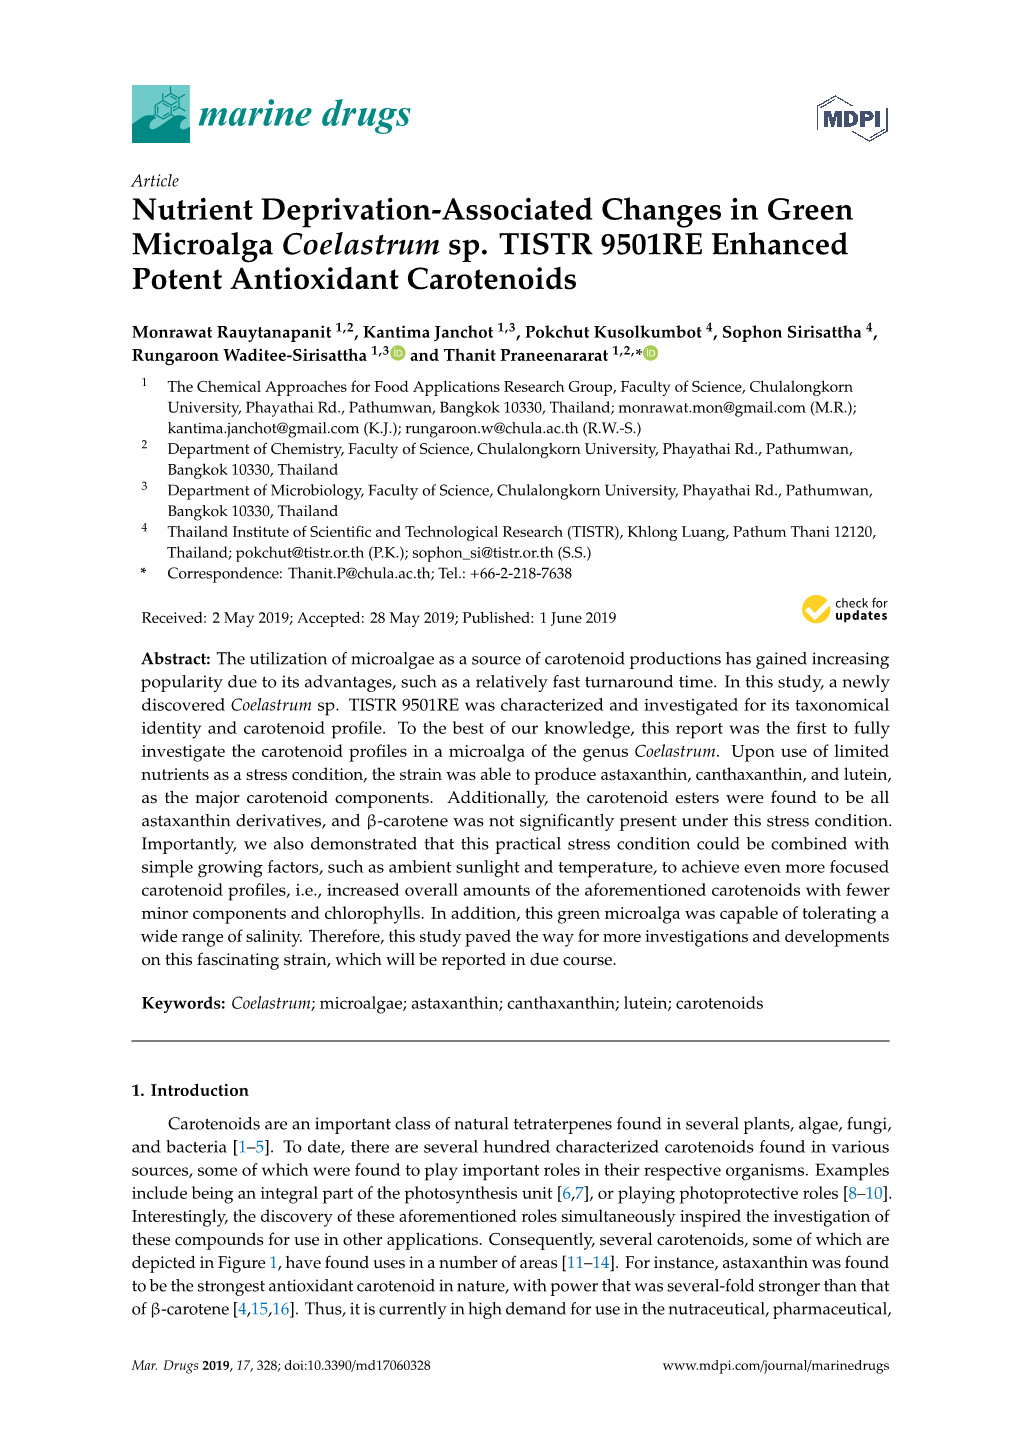 Nutrient Deprivation-Associated Changes in Green Microalga Coelastrum Sp. TISTR 9501RE Enhanced Potent Antioxidant Carotenoids